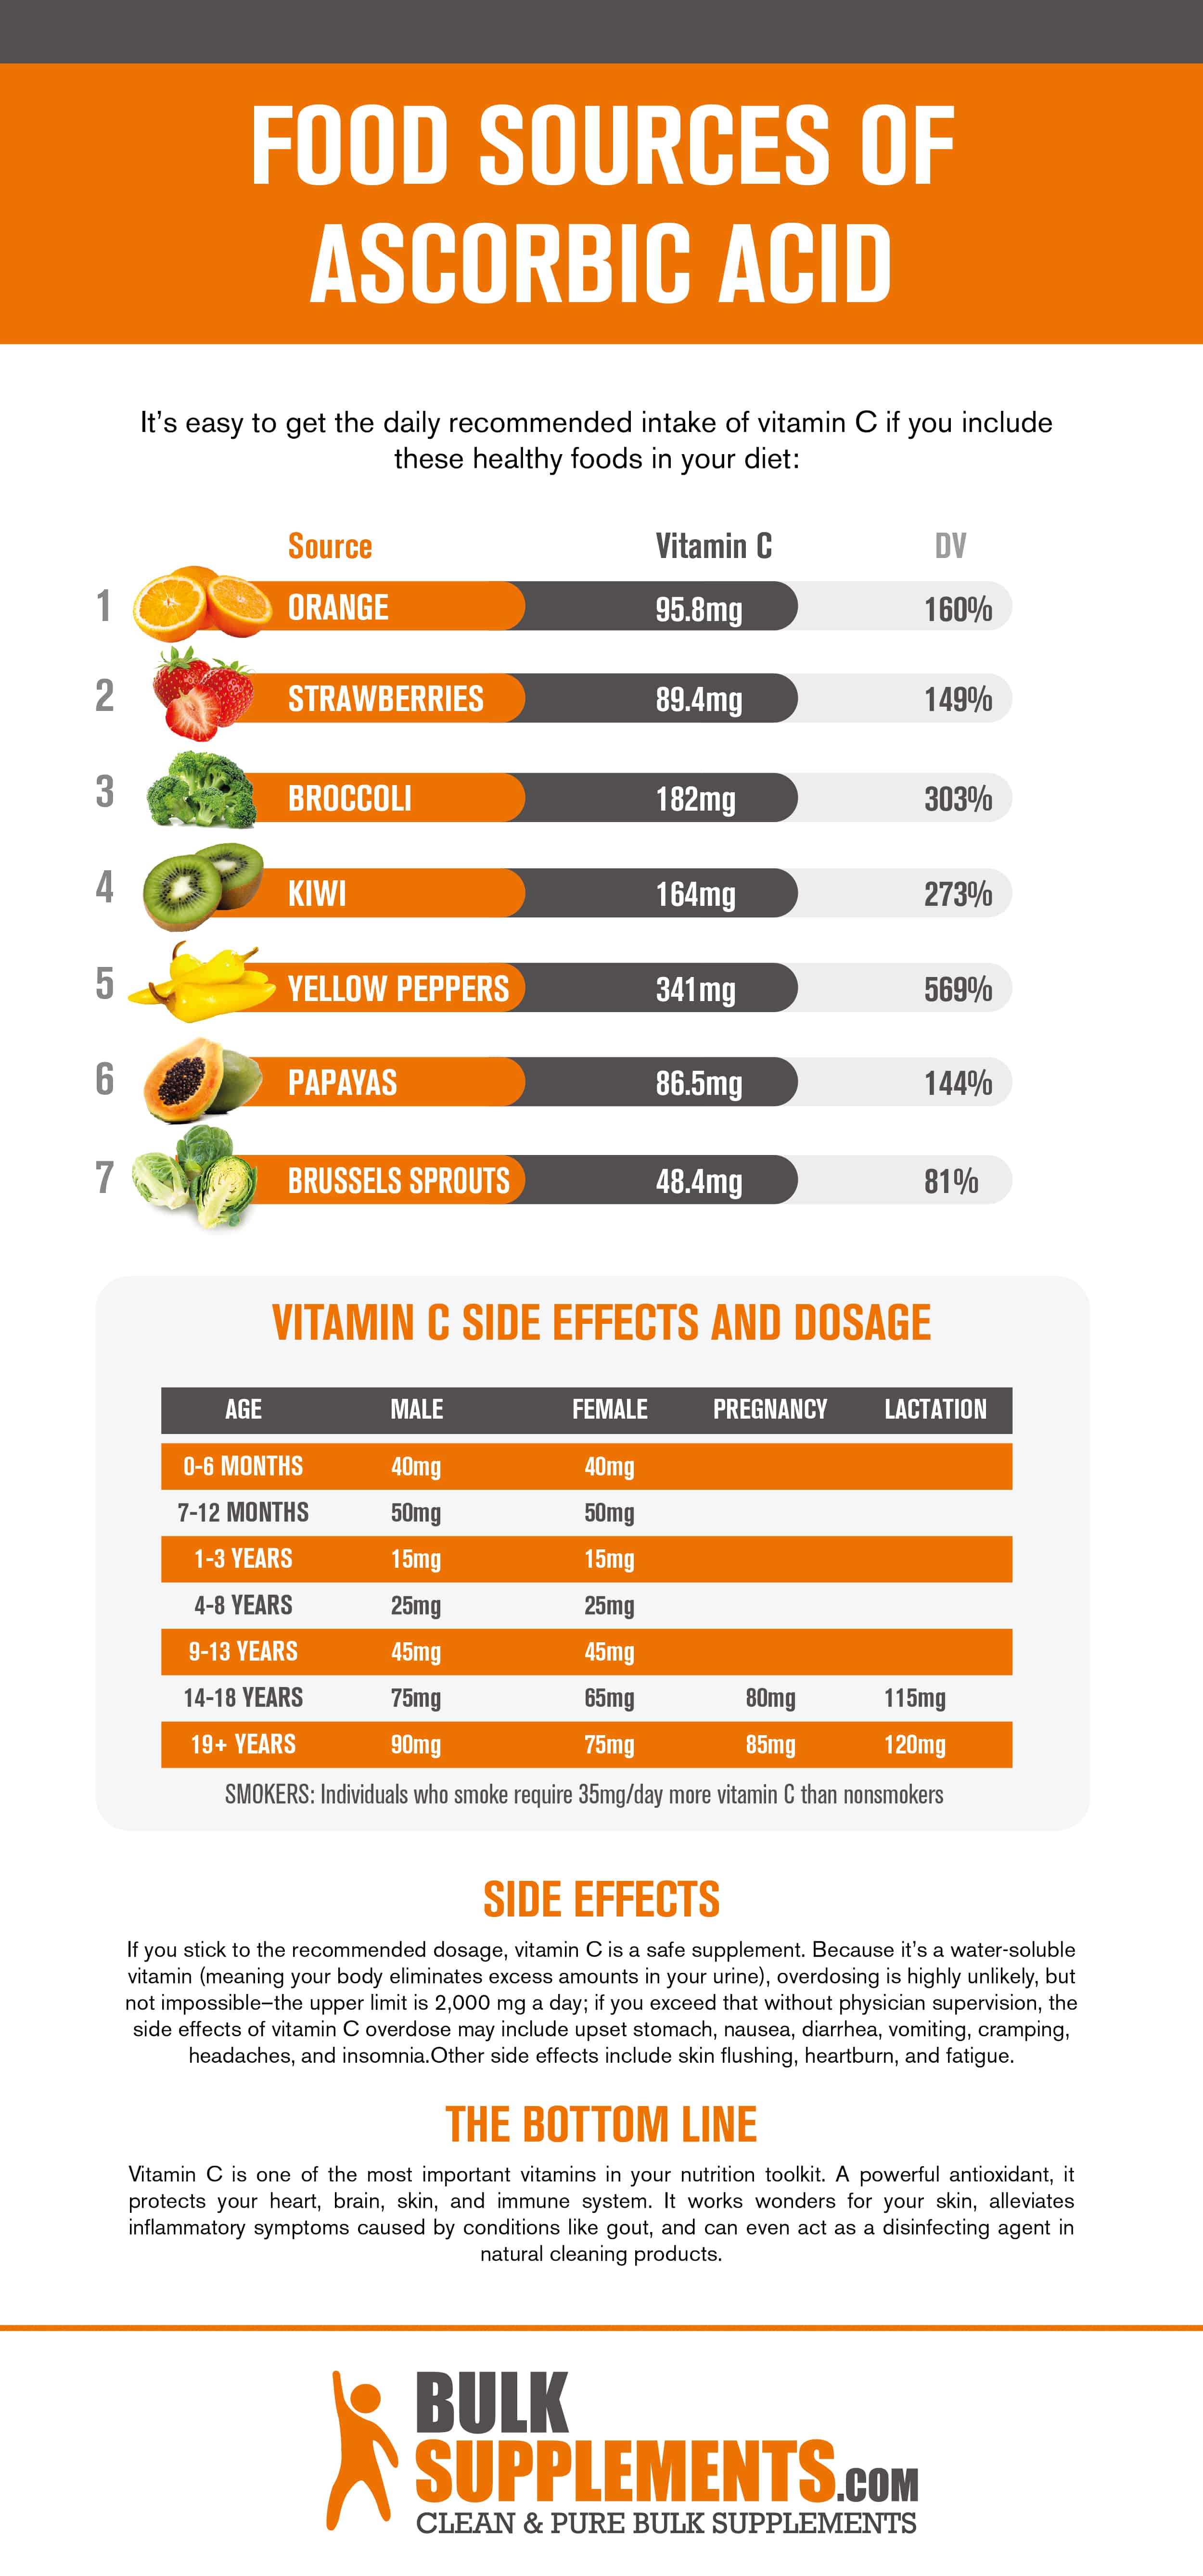 Food Sources of Vitamin C